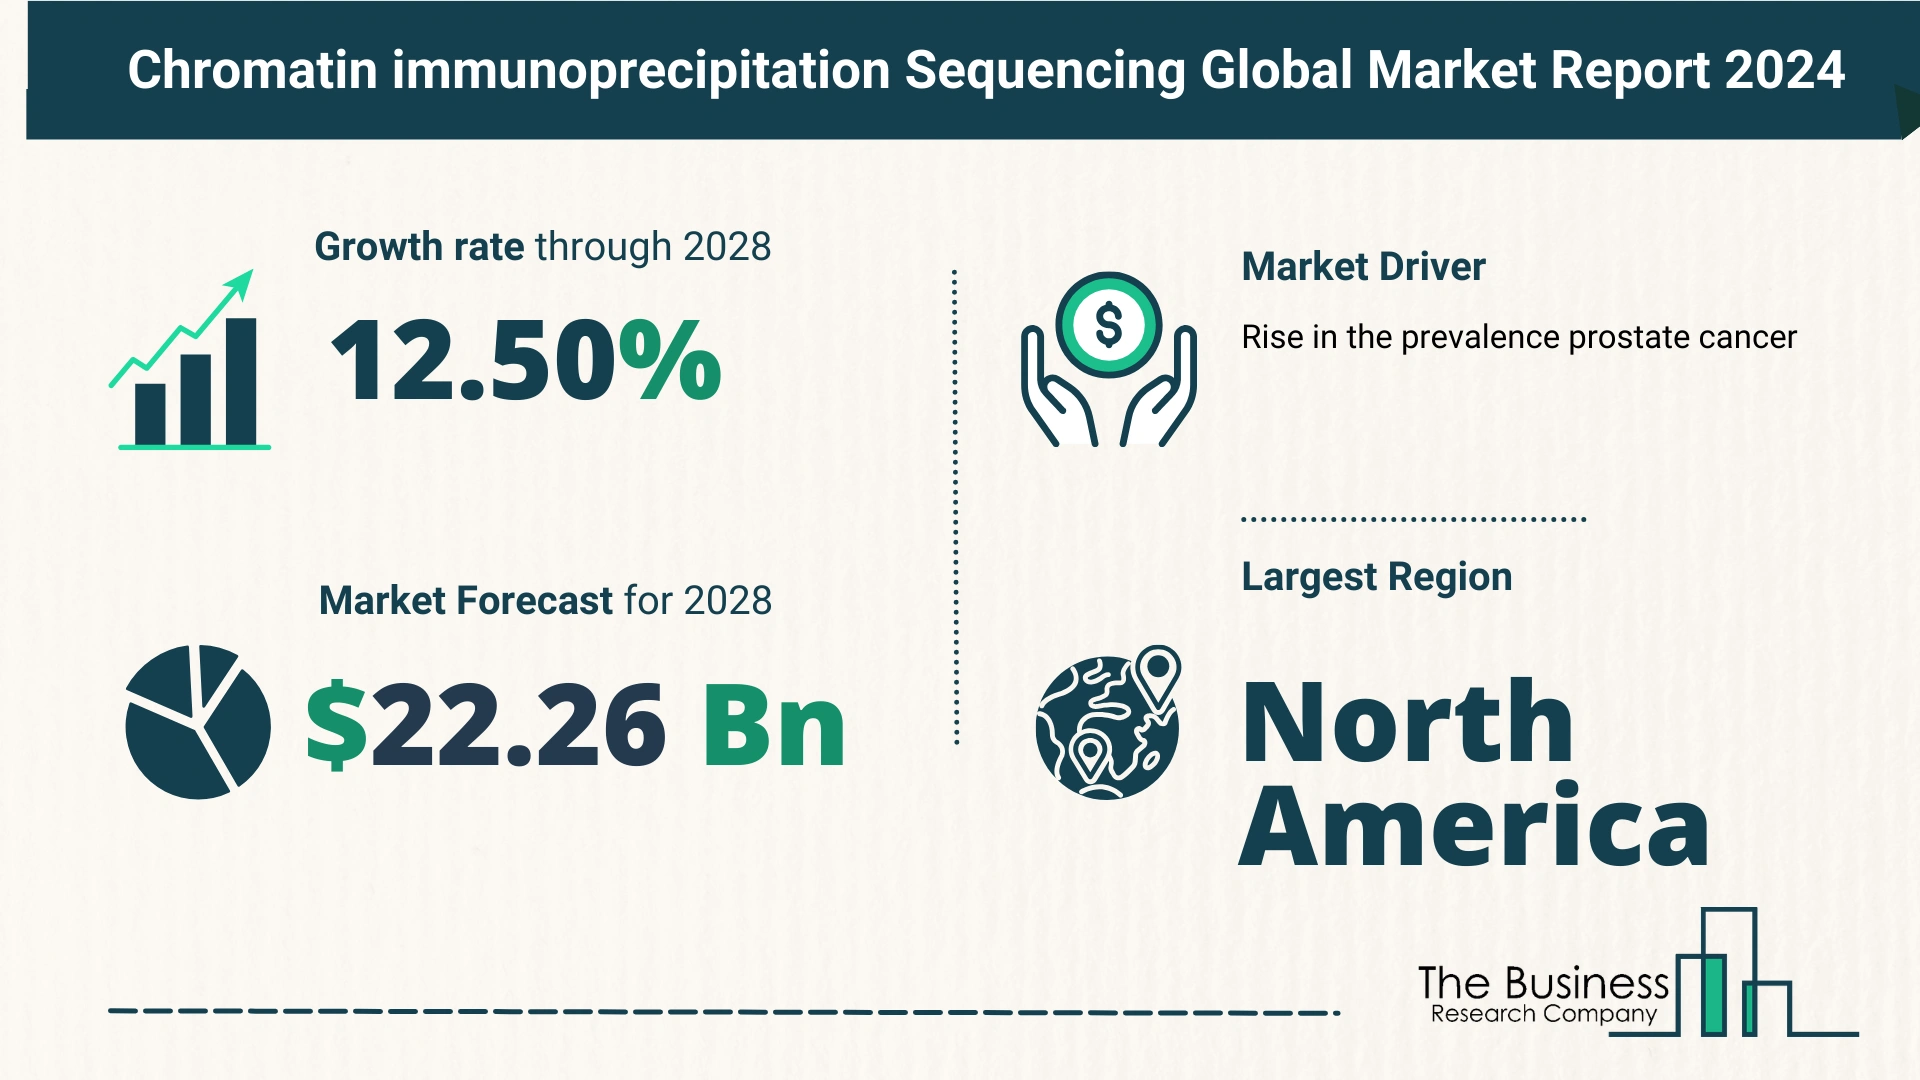 Global Chromatin immunoprecipitation (ChIP) Sequencing Market